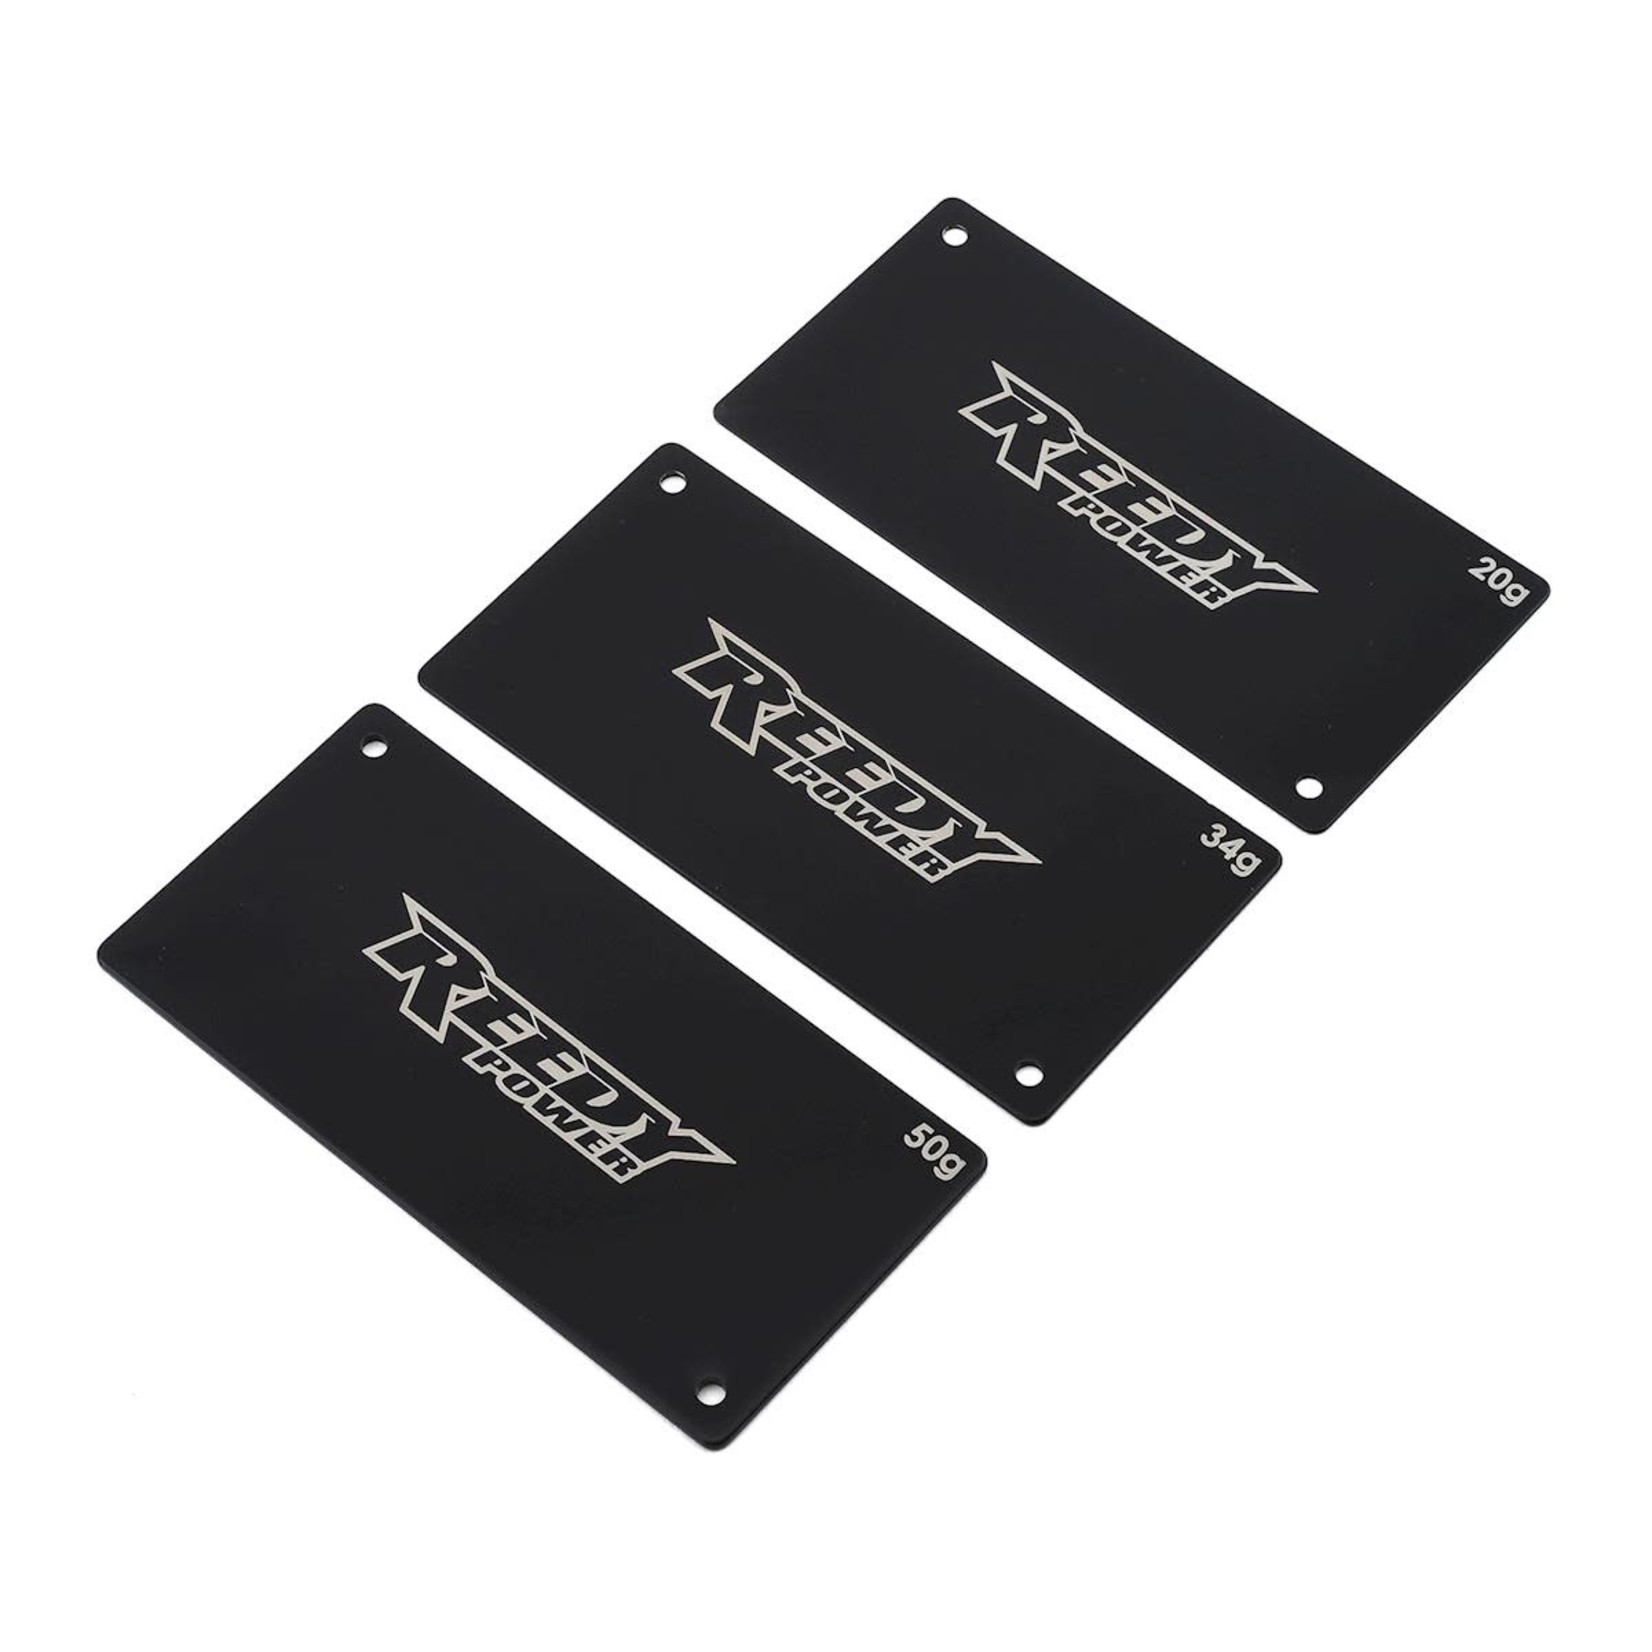 Reedy Reedy Steel Shorty LiPo Battery Weight Set (20g, 34g, 50g) #27355